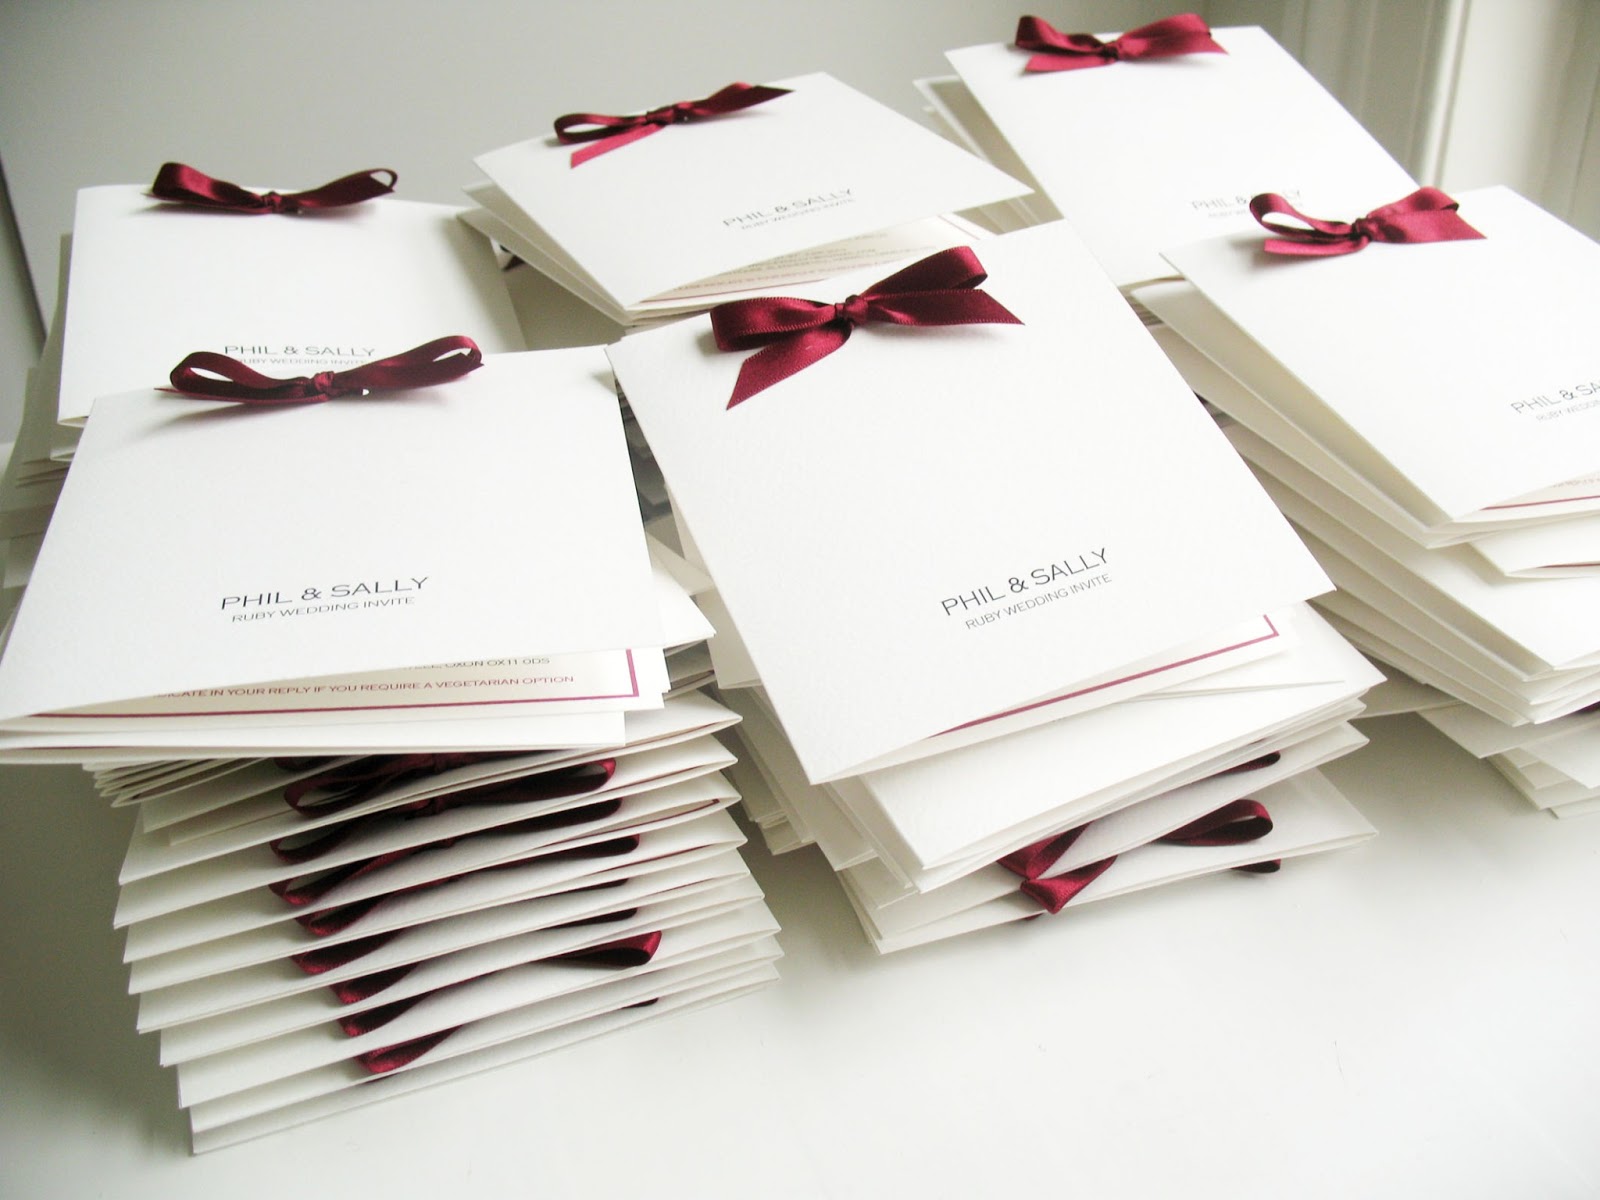 Inspiration for weddings, invitations and stationery: burgundy wedding invitations